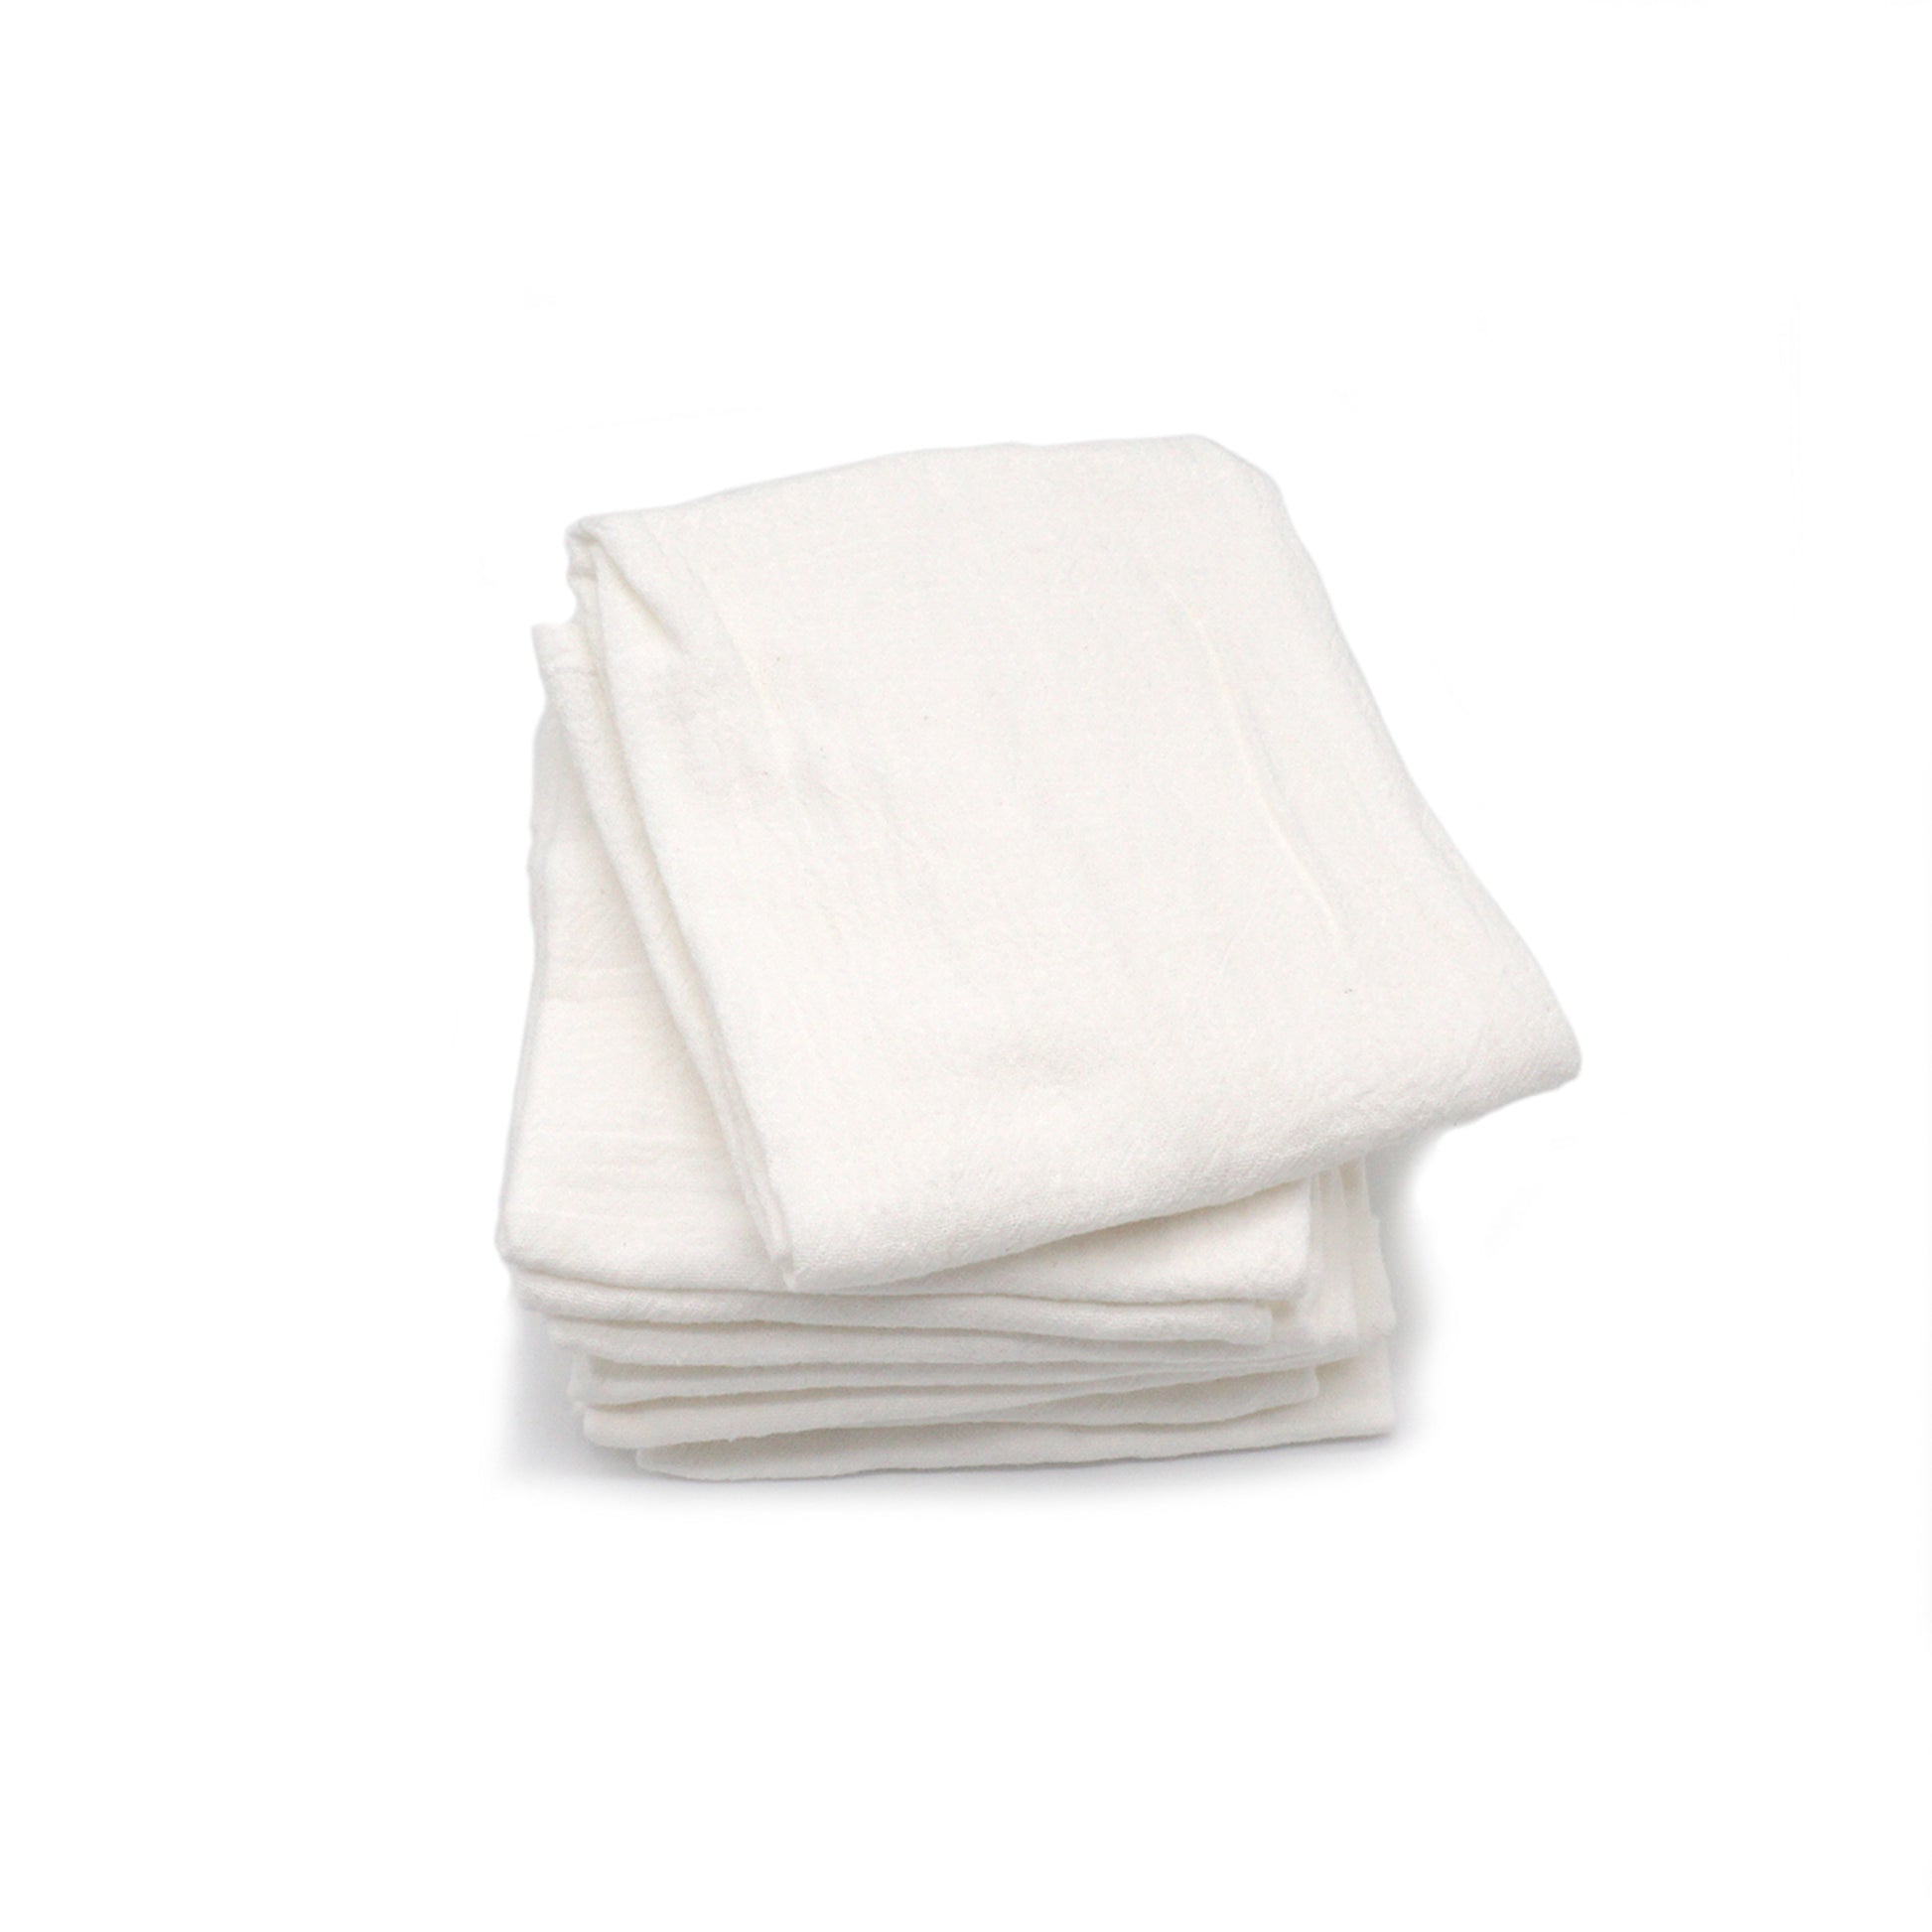 White Flour Sack Dishtowel (Set of 5)